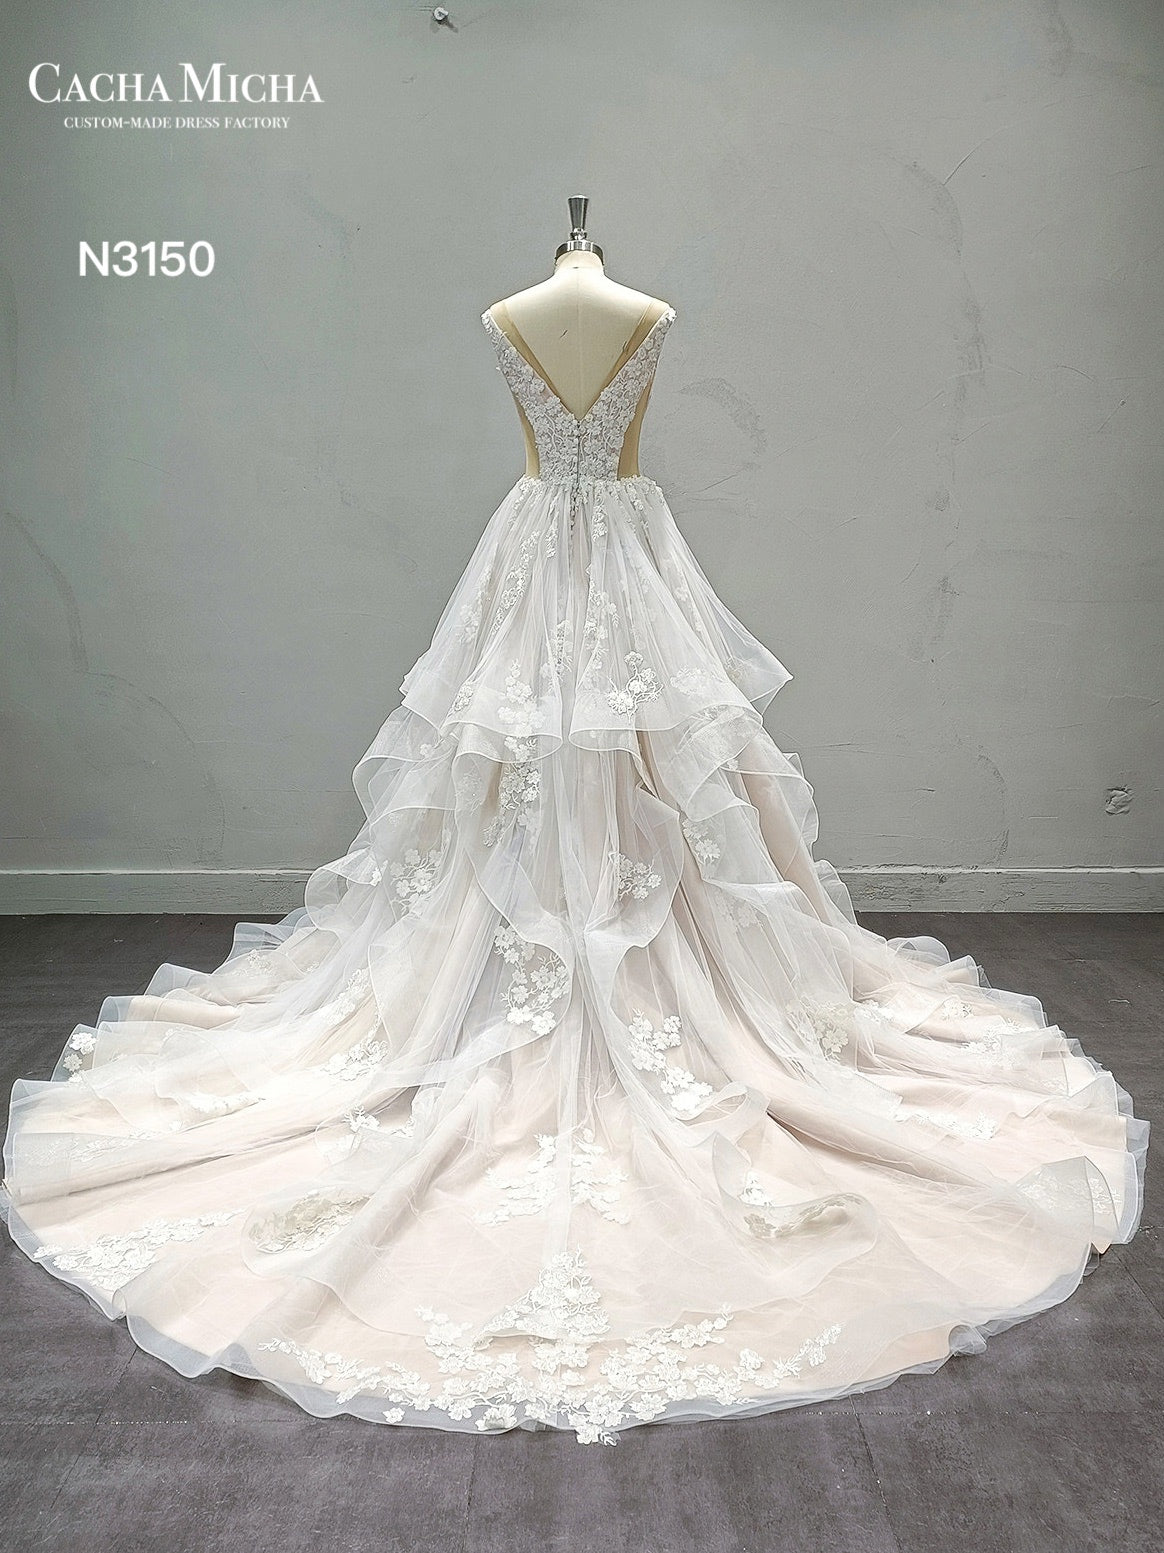 Champagne Color Heavy Beaded Ruffle Skirt Wedding Dress N3150